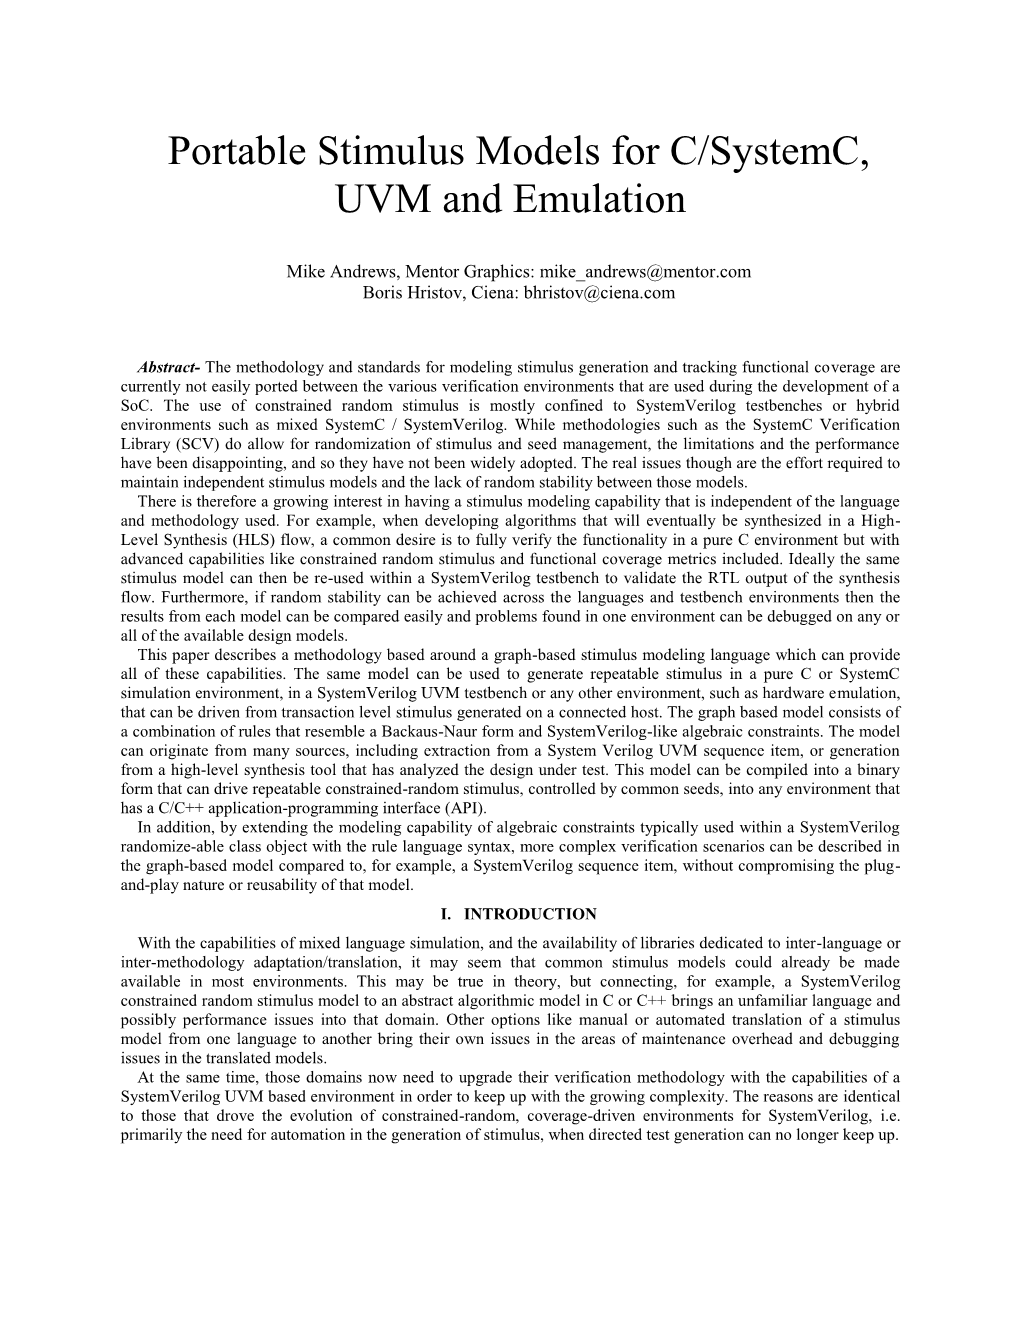 Portable Stimulus Models for C/Systemc, UVM and Emulation